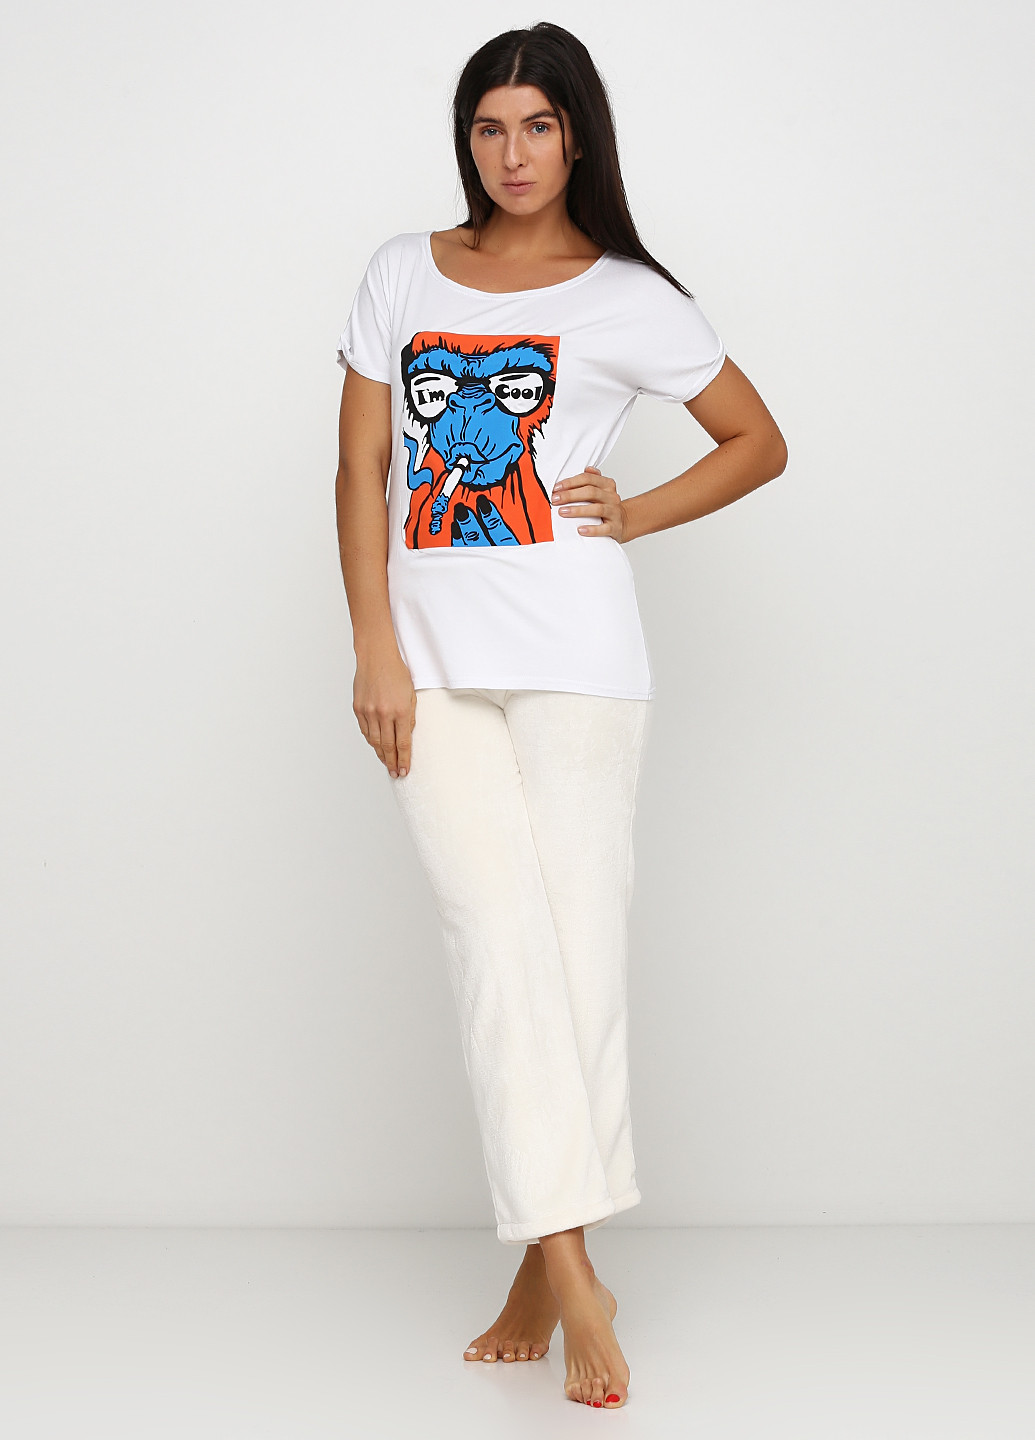 Молочная всесезон пижама (футболка, брюки) футболка + бриджи Ghazel